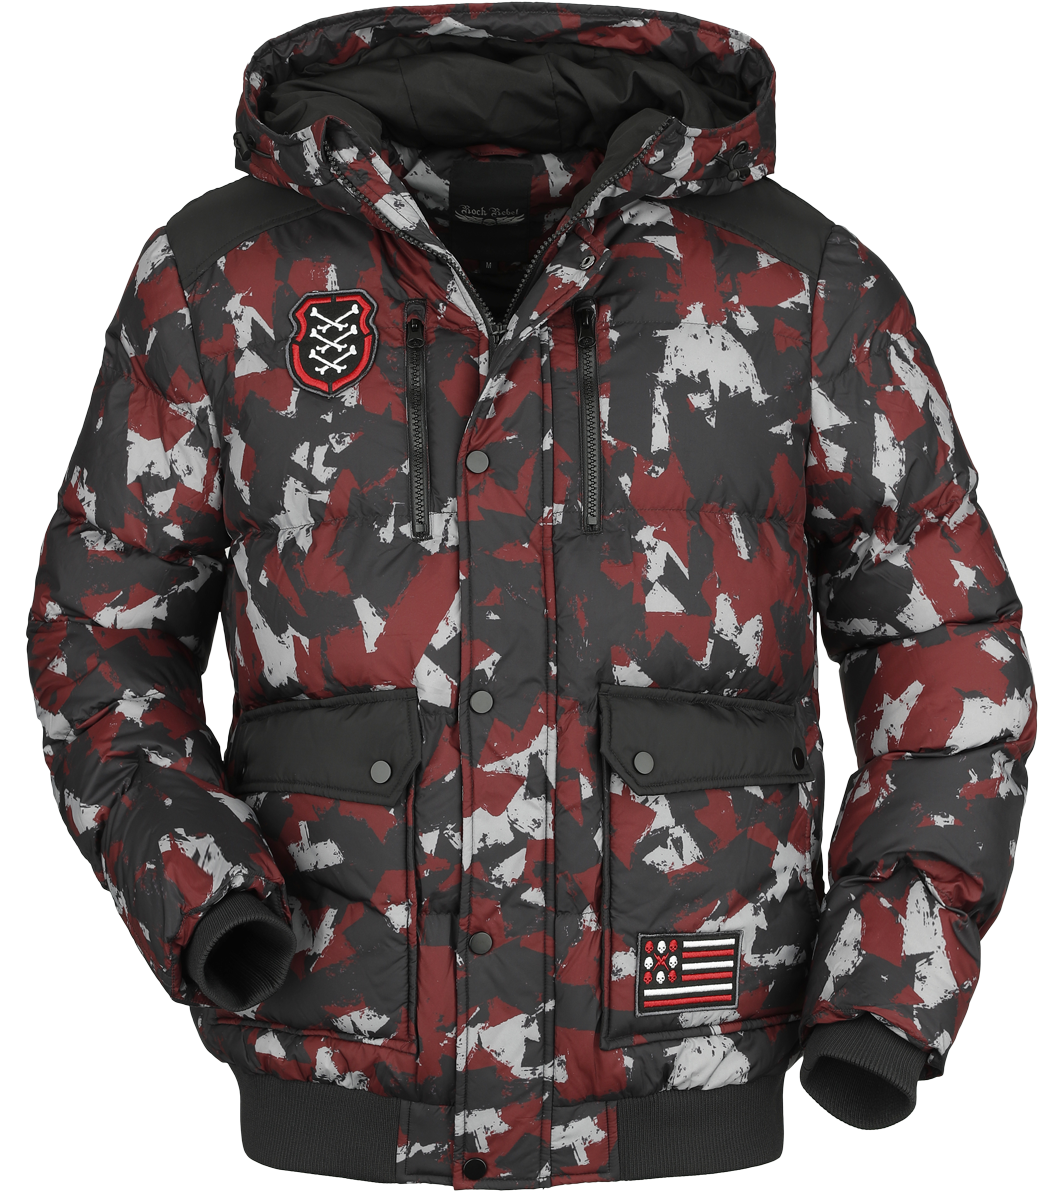 Rock Rebel by EMP - Camouflage puffer jacket - Winterjacke - camouflage - EMP Exklusiv!